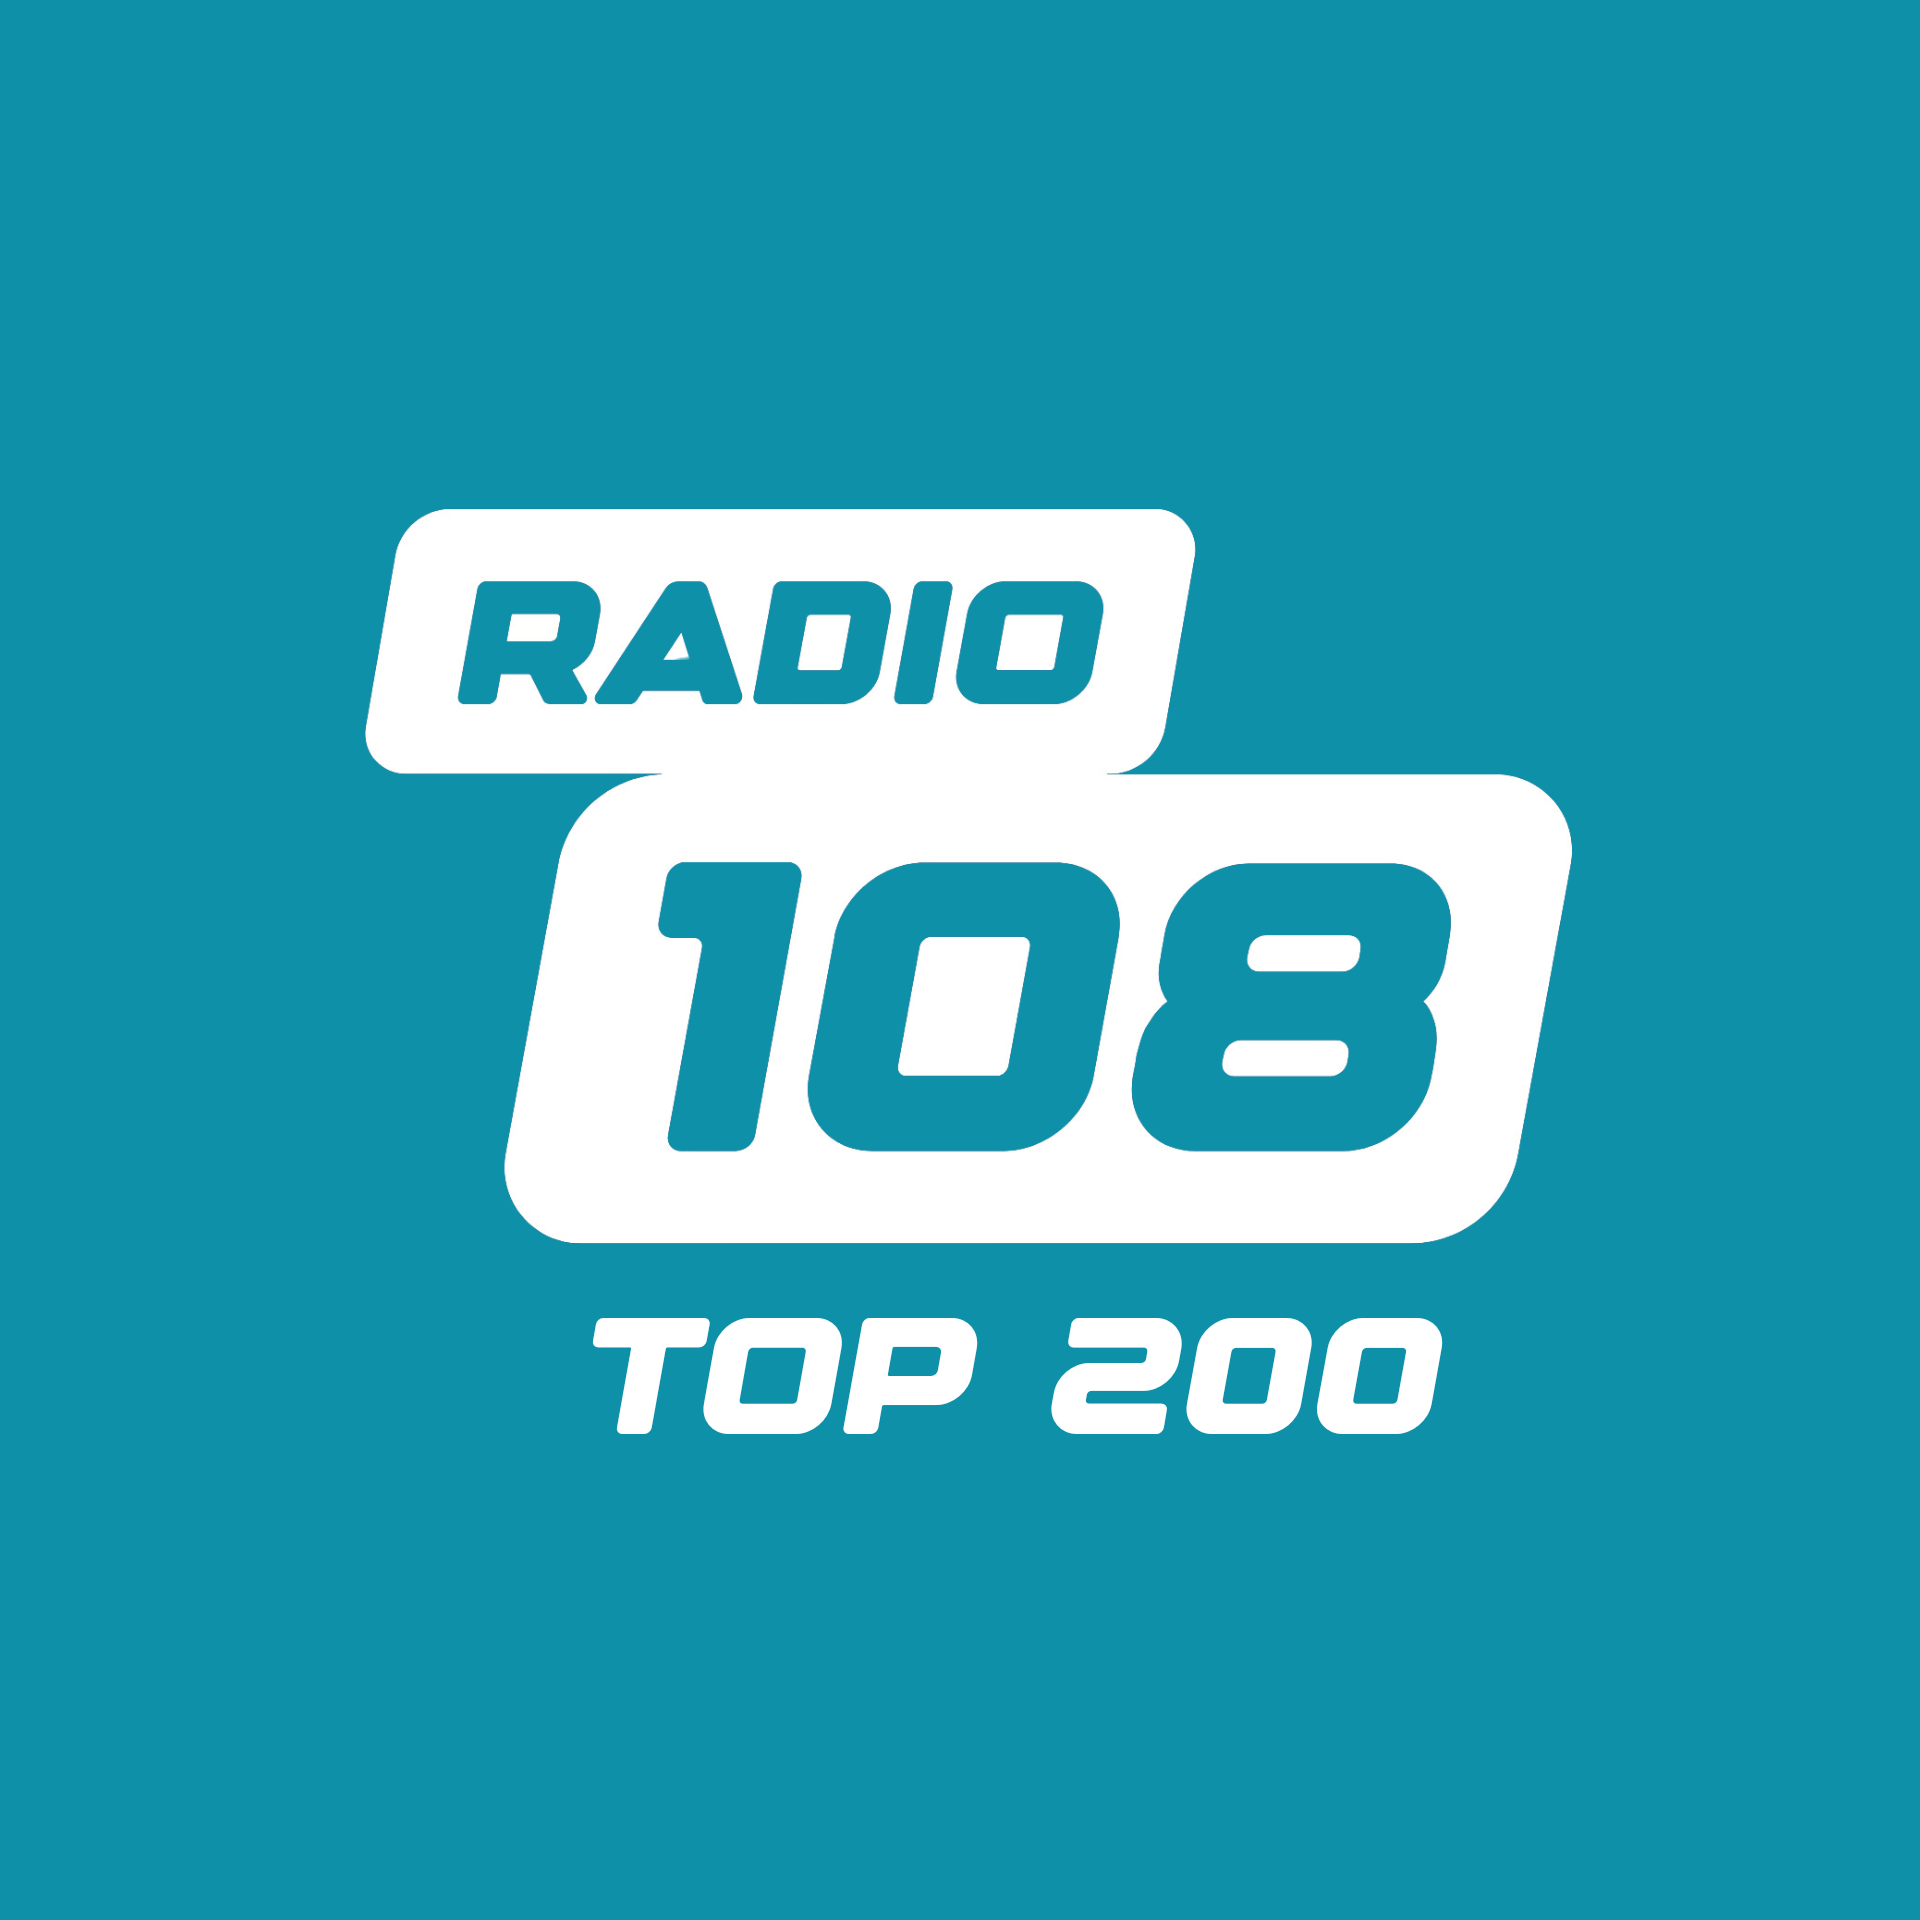 RADIO 108 - TOP 200